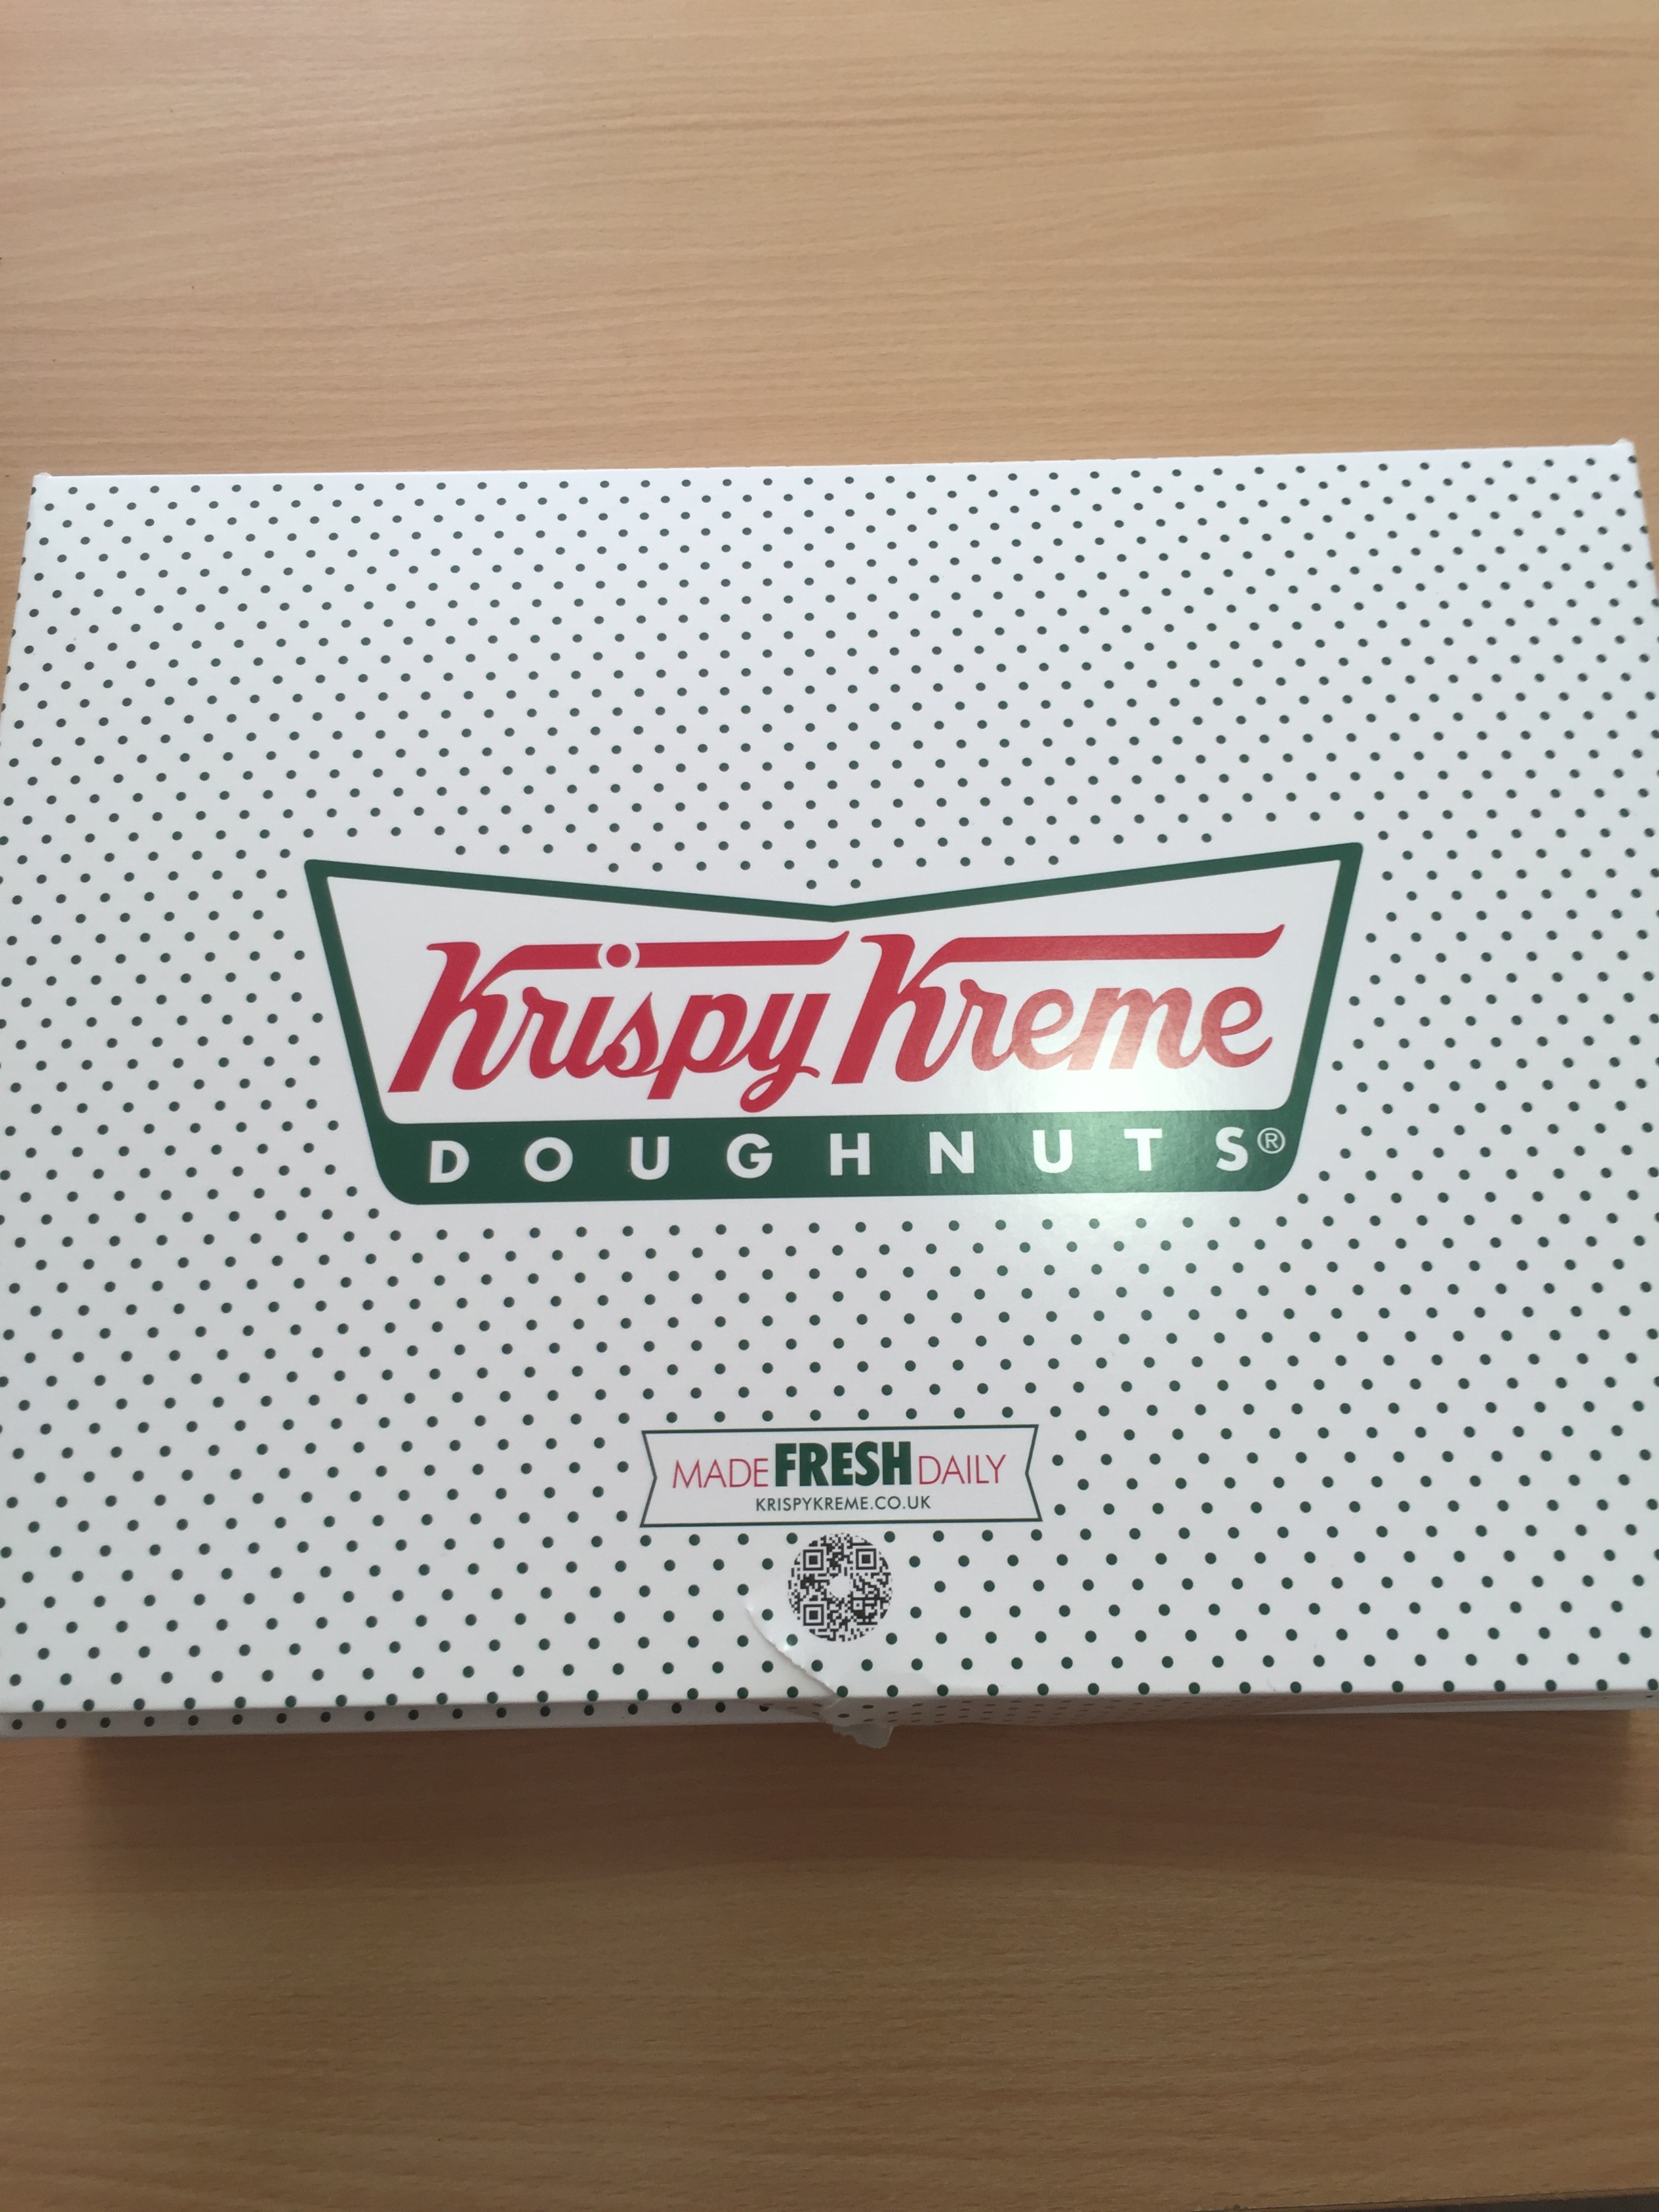 Krispy Kreme doughnuts from MK FM